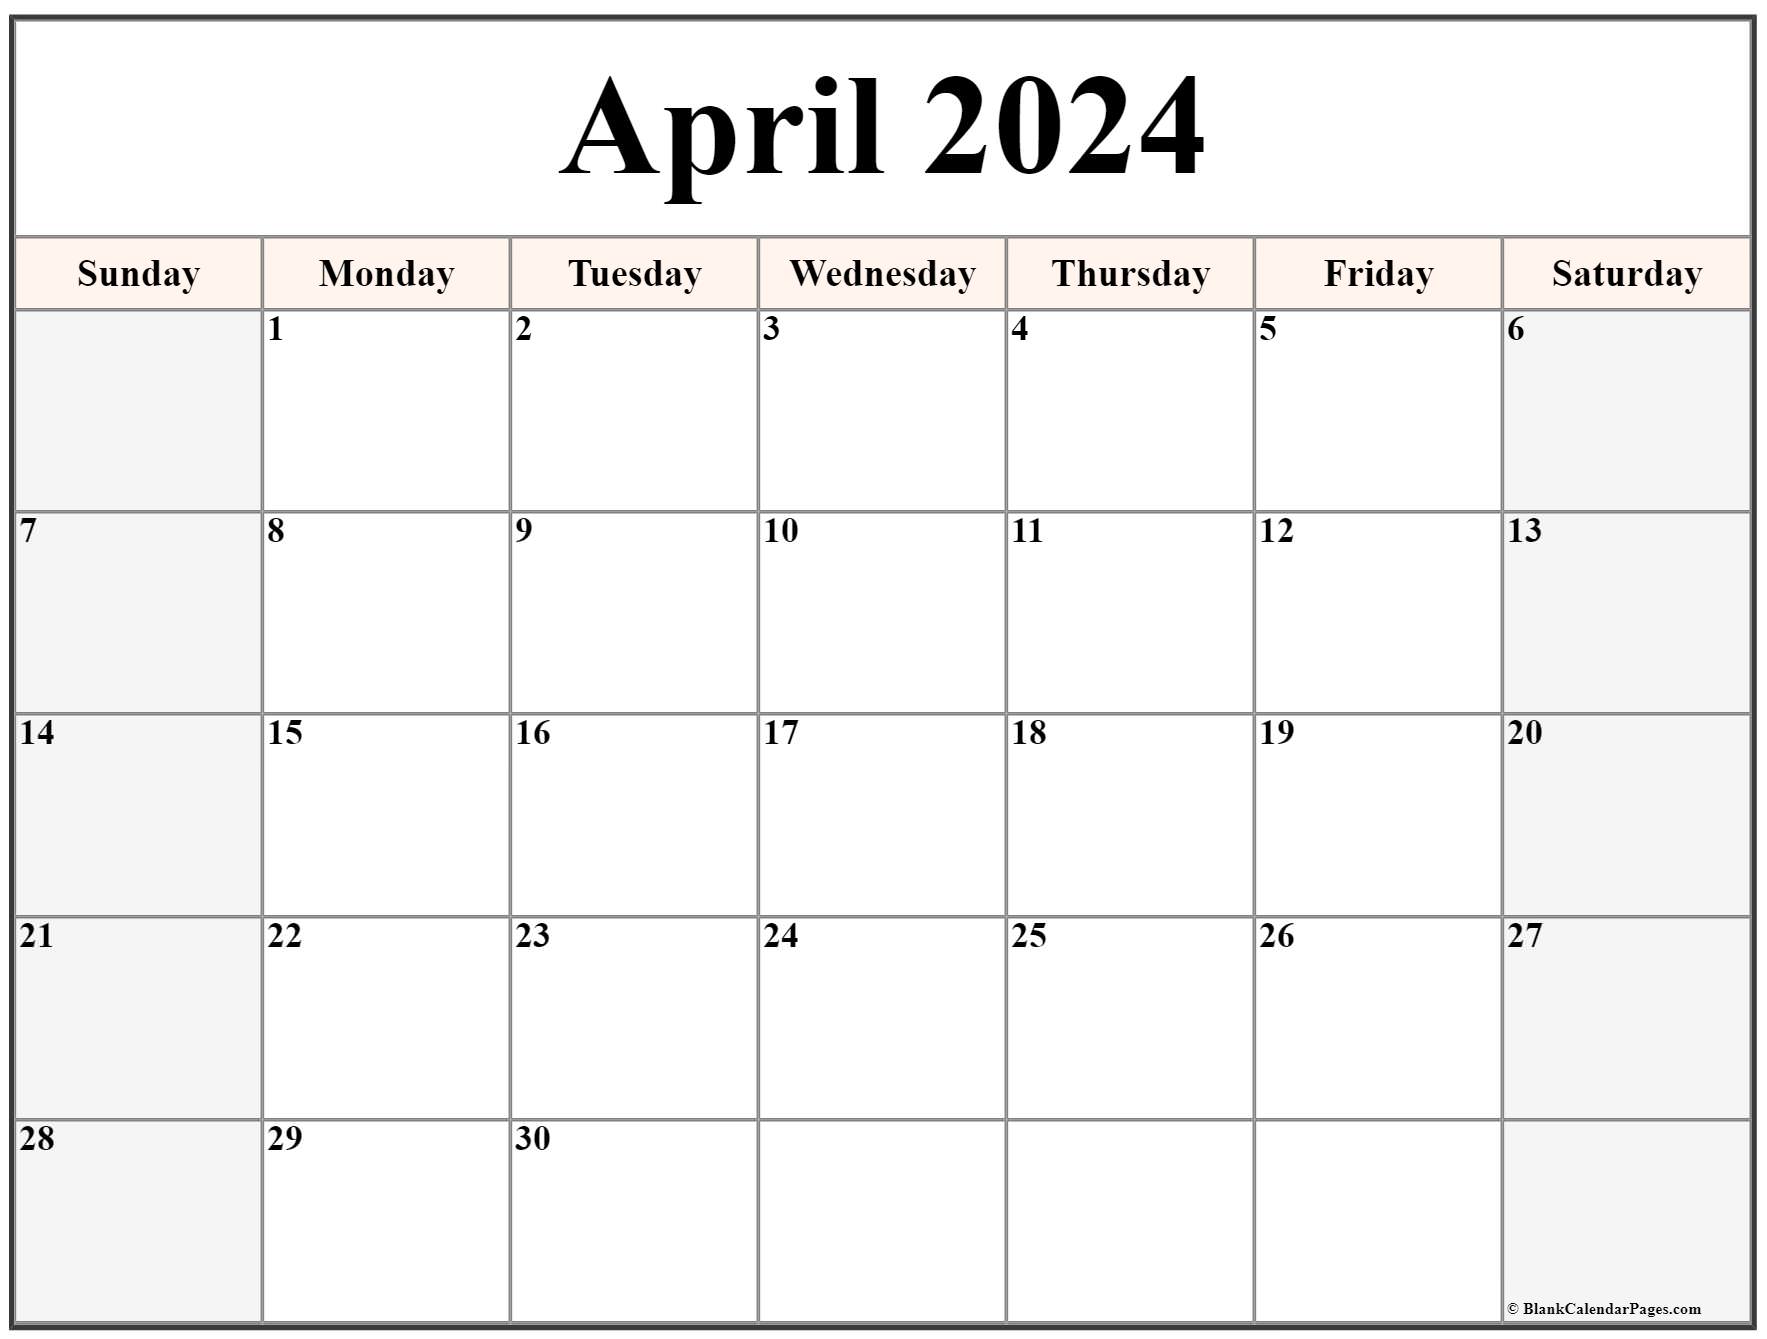 April 2024 Calendar B11 